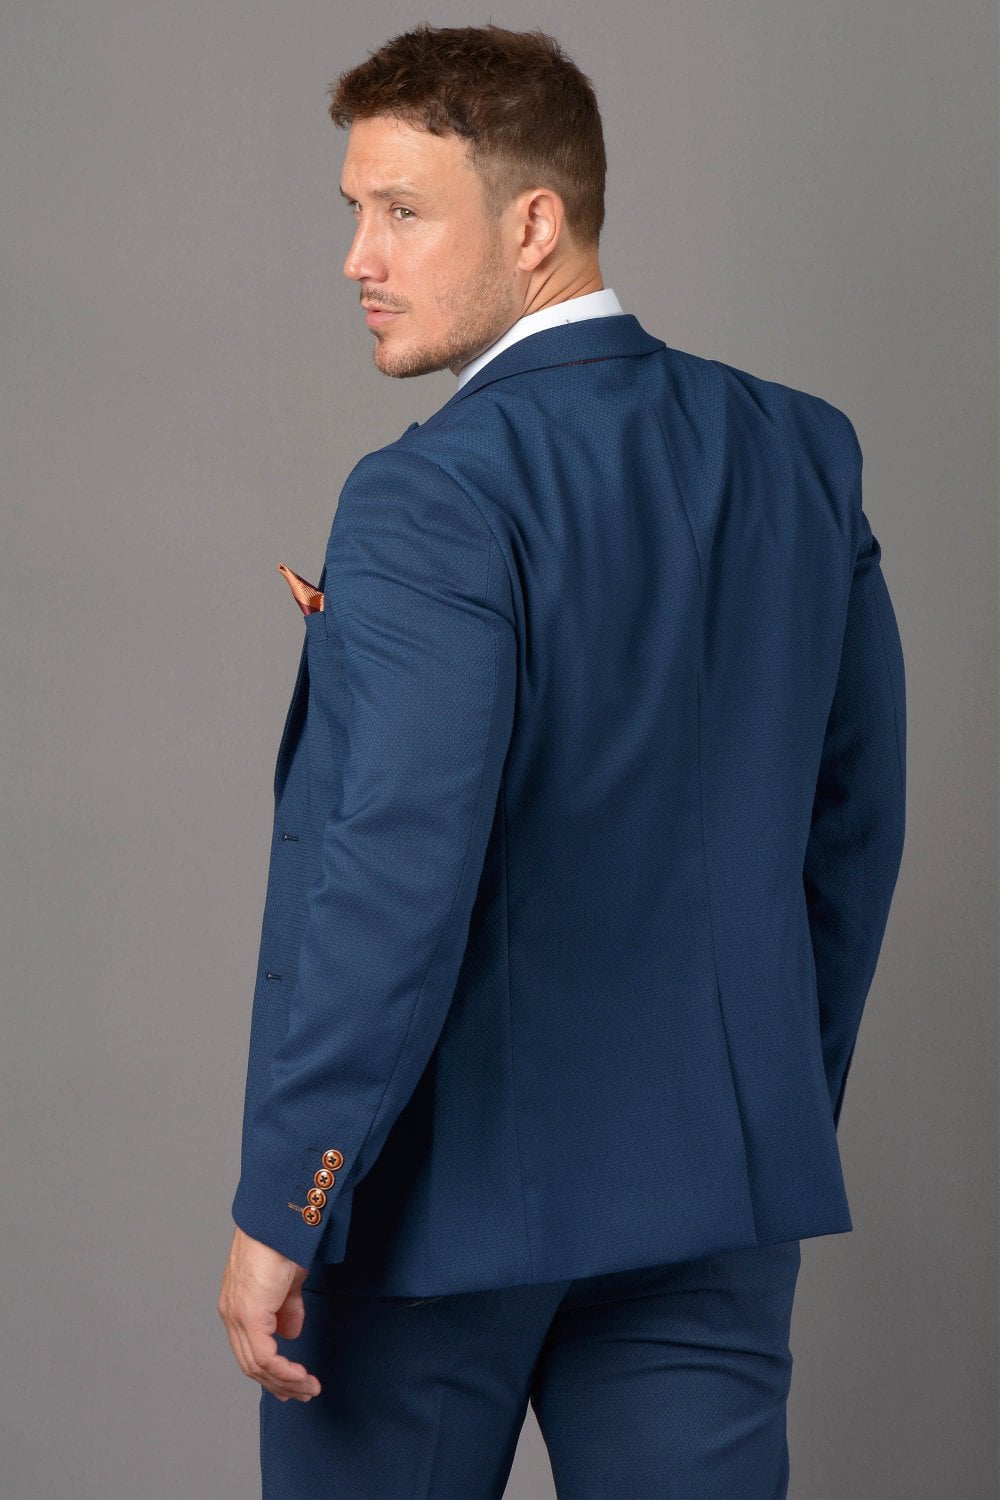 Marc Darcy Royal Blue Three Piece Suit